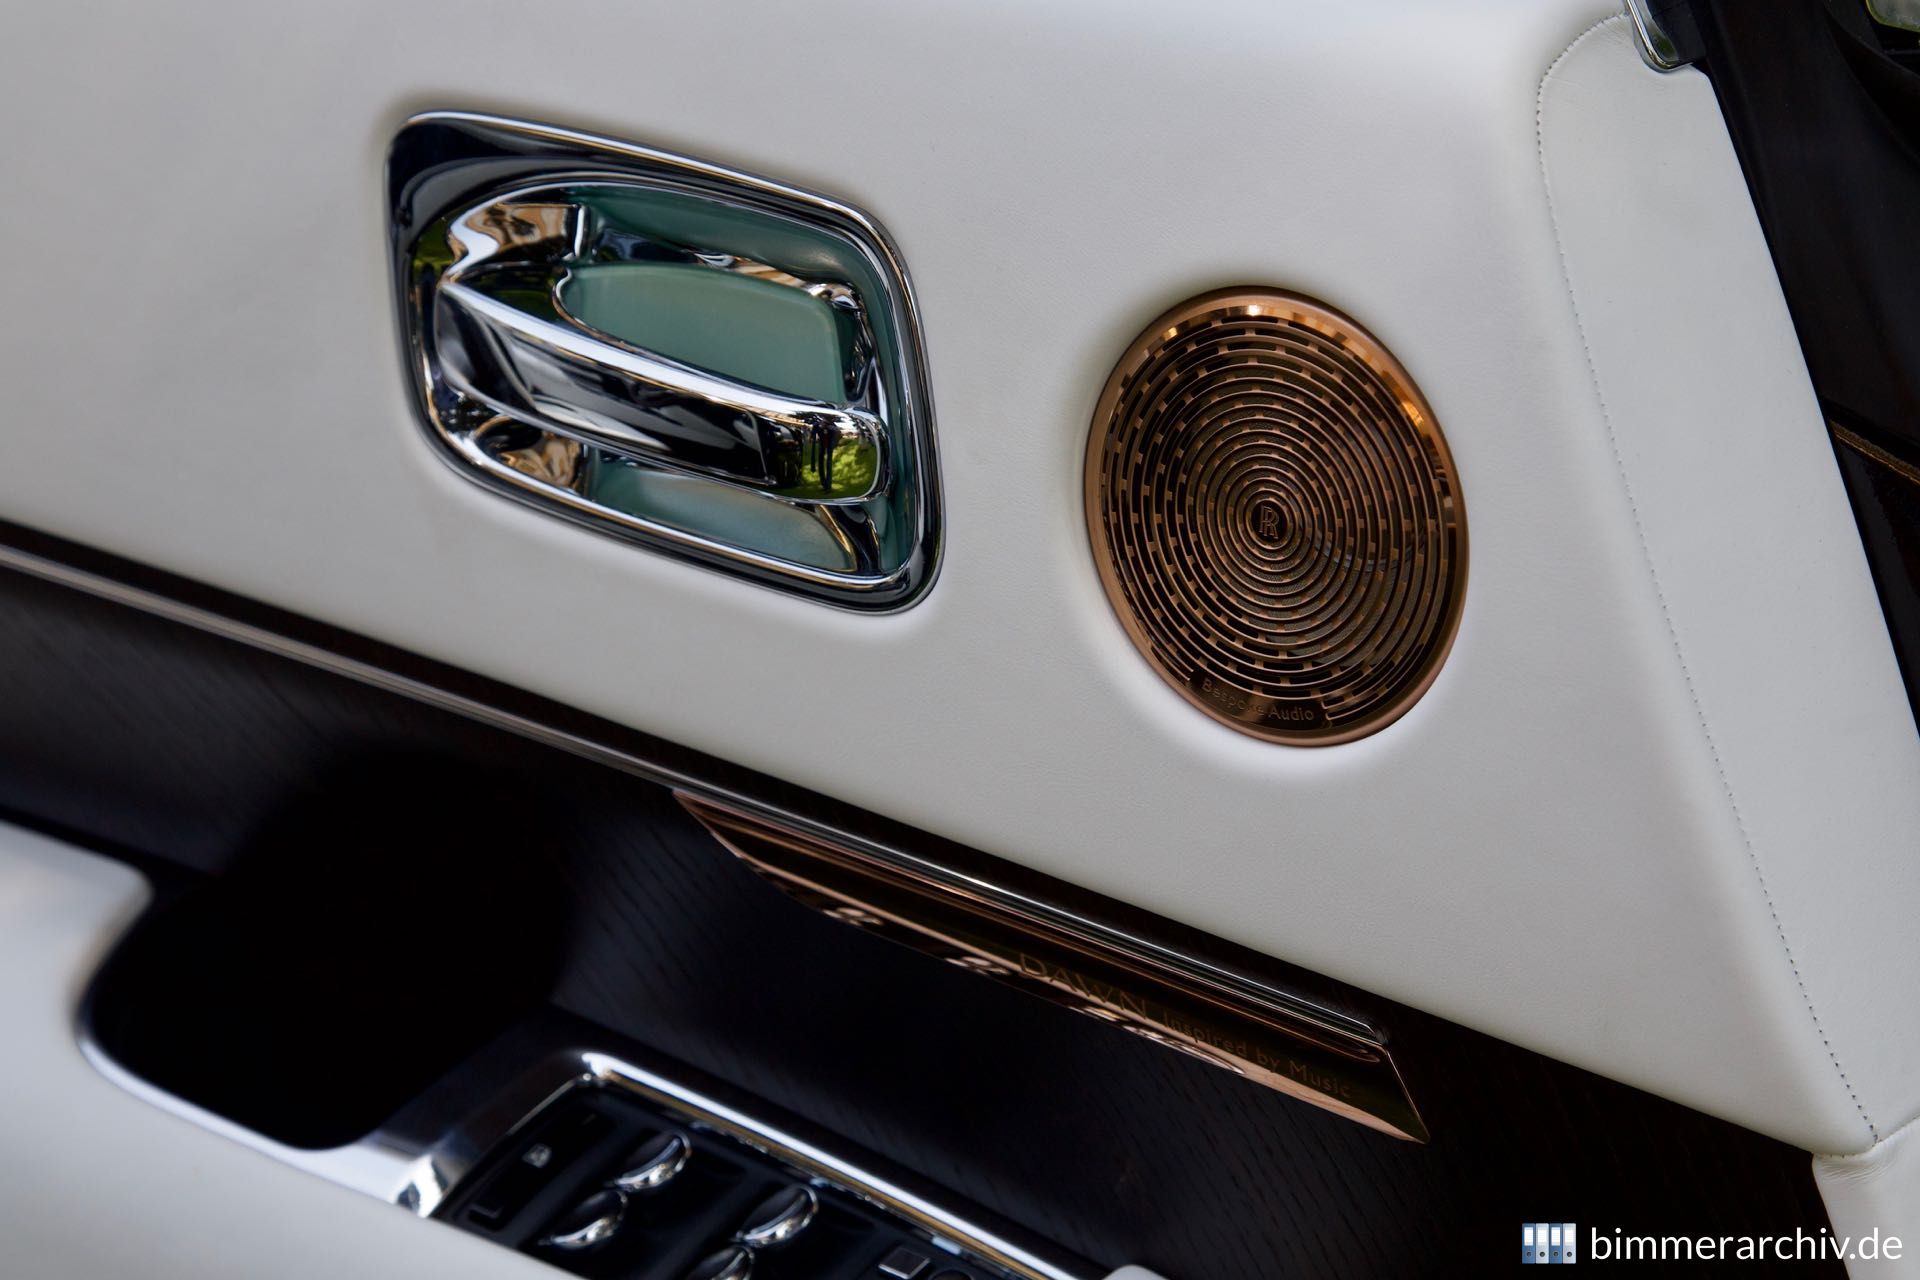 Rolls-Royce Dawn - Inspired by Music